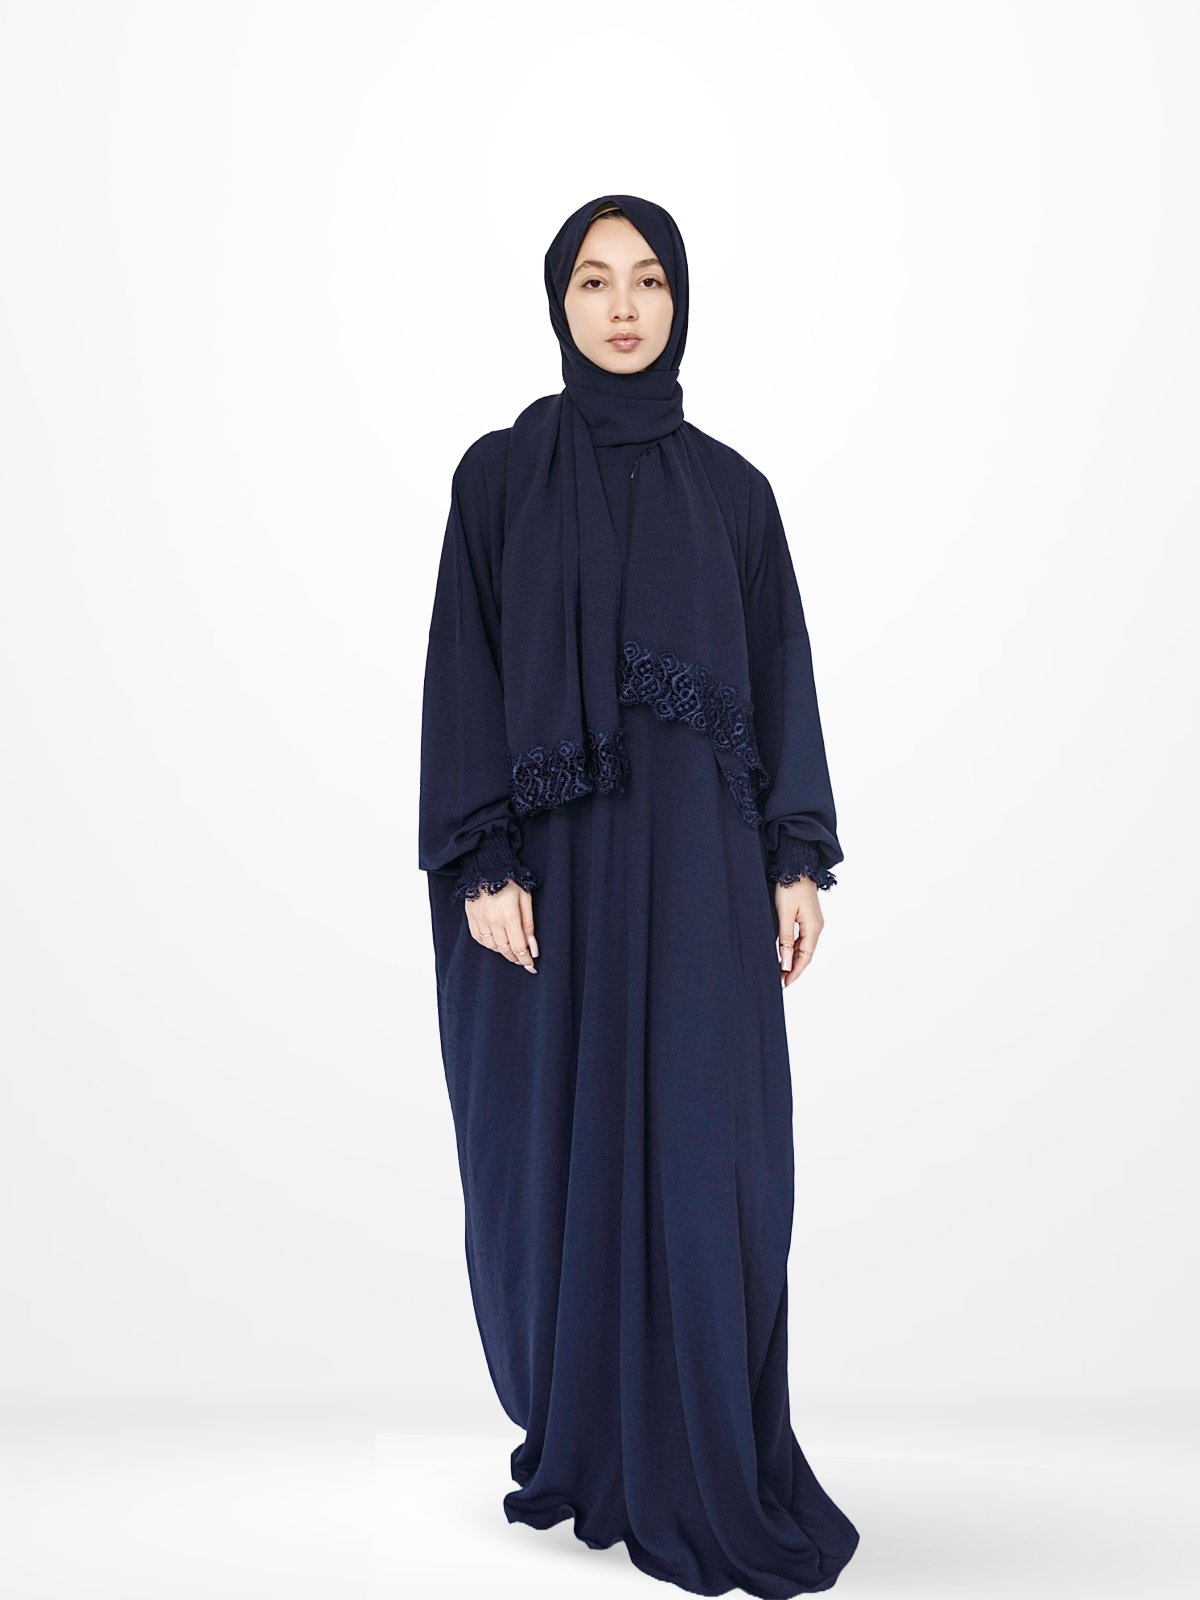 One-Piece Prayer Dress & Abaya with attached Hijab - Plain - Modest Essence